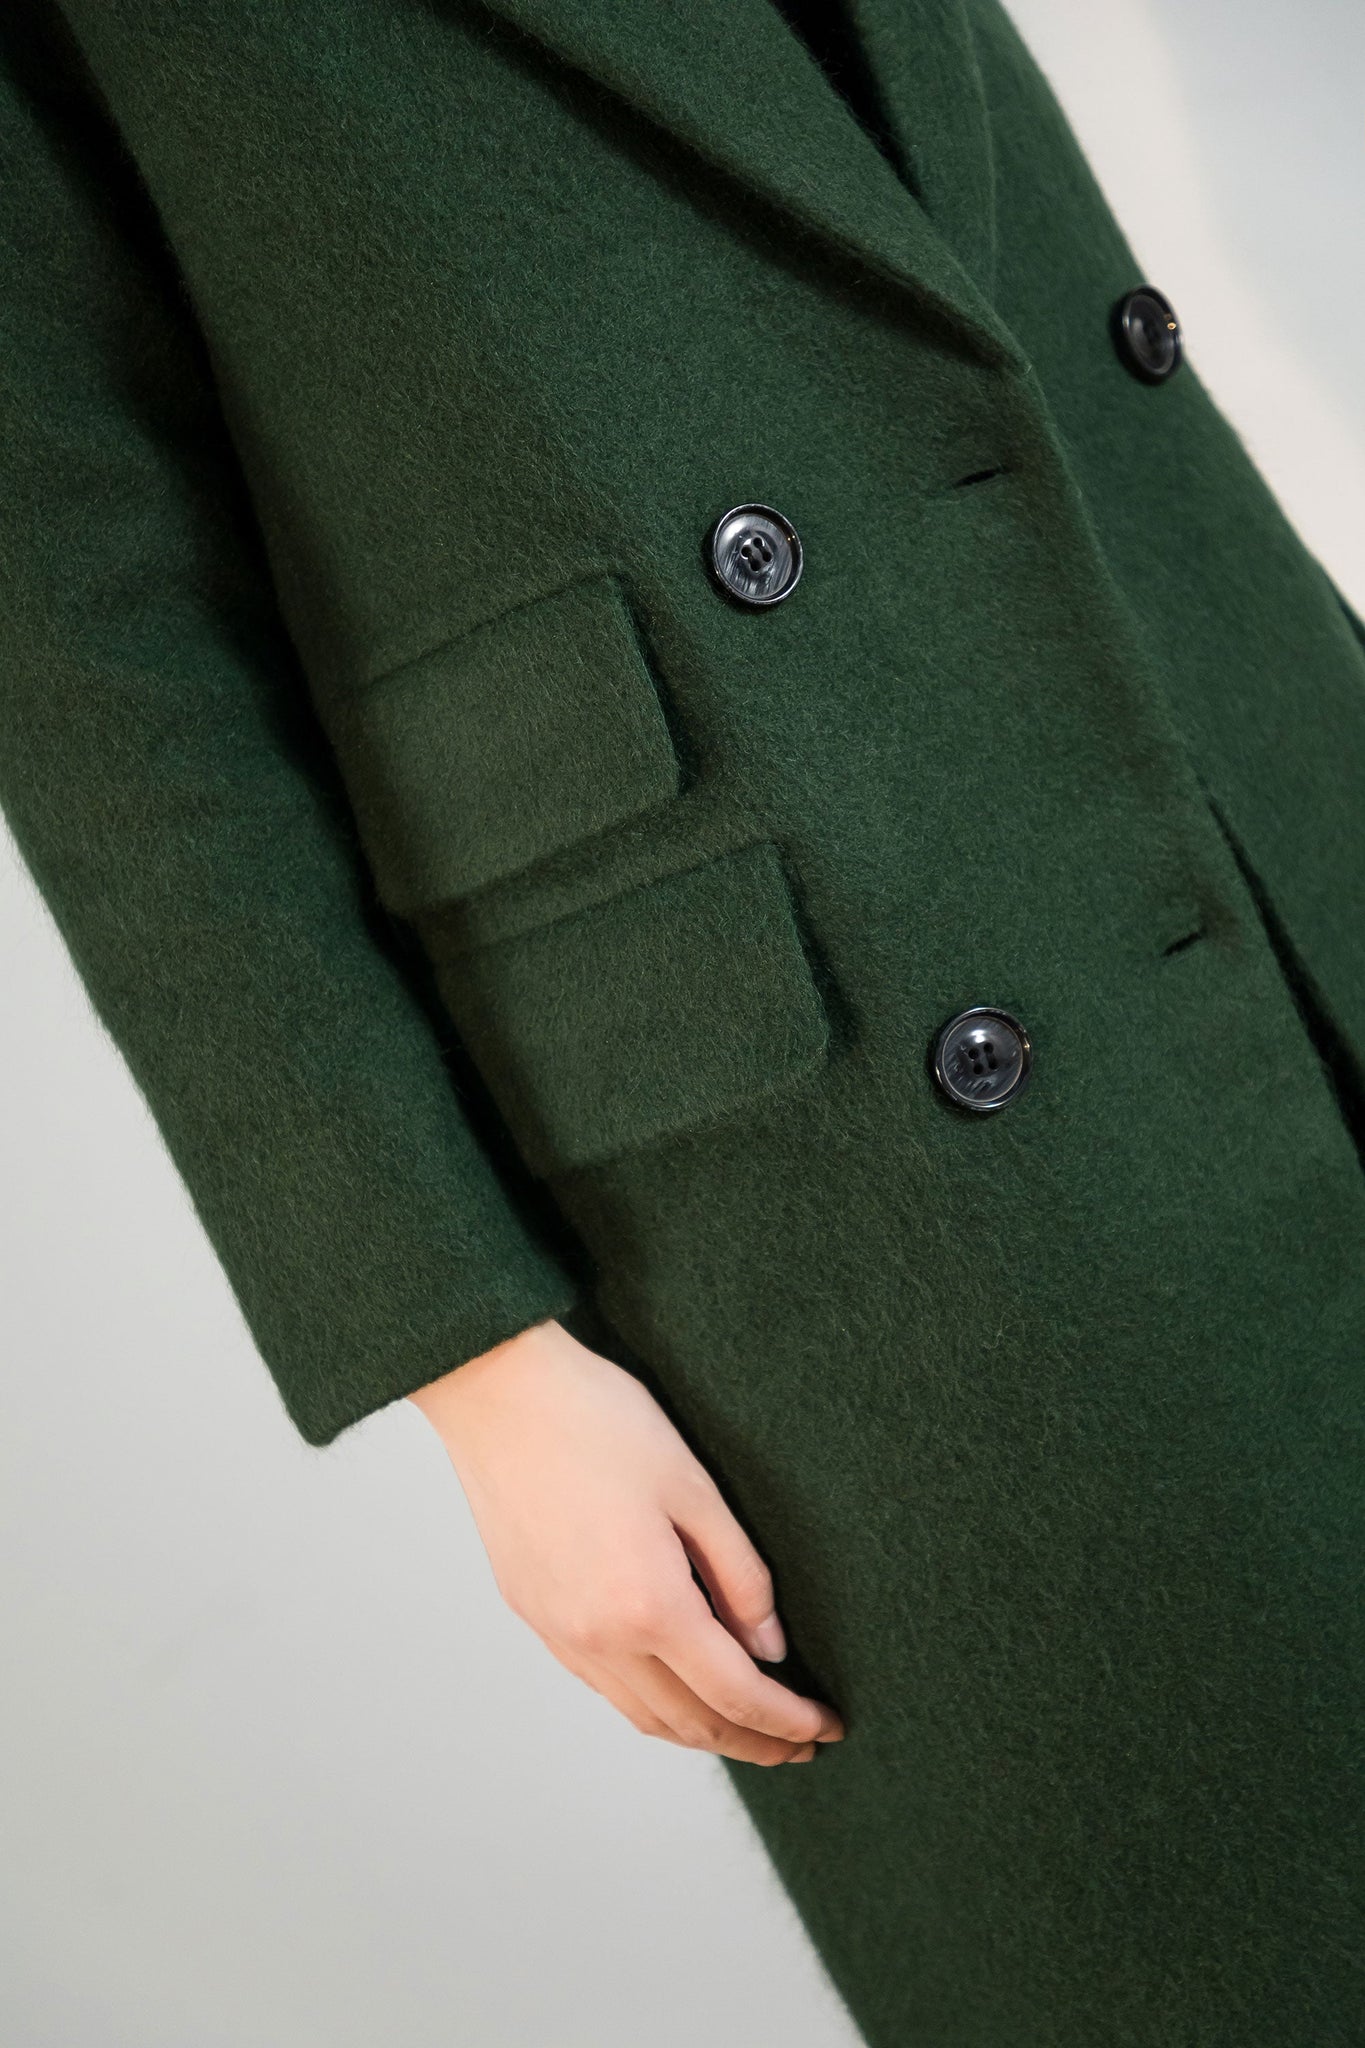 Emerald Green Wool Coat Long Wool Coat Double-breasted Wool Coat Winter Coat  Women Belted Trench Coat A-line Wool Coat Ylistyle C1765 